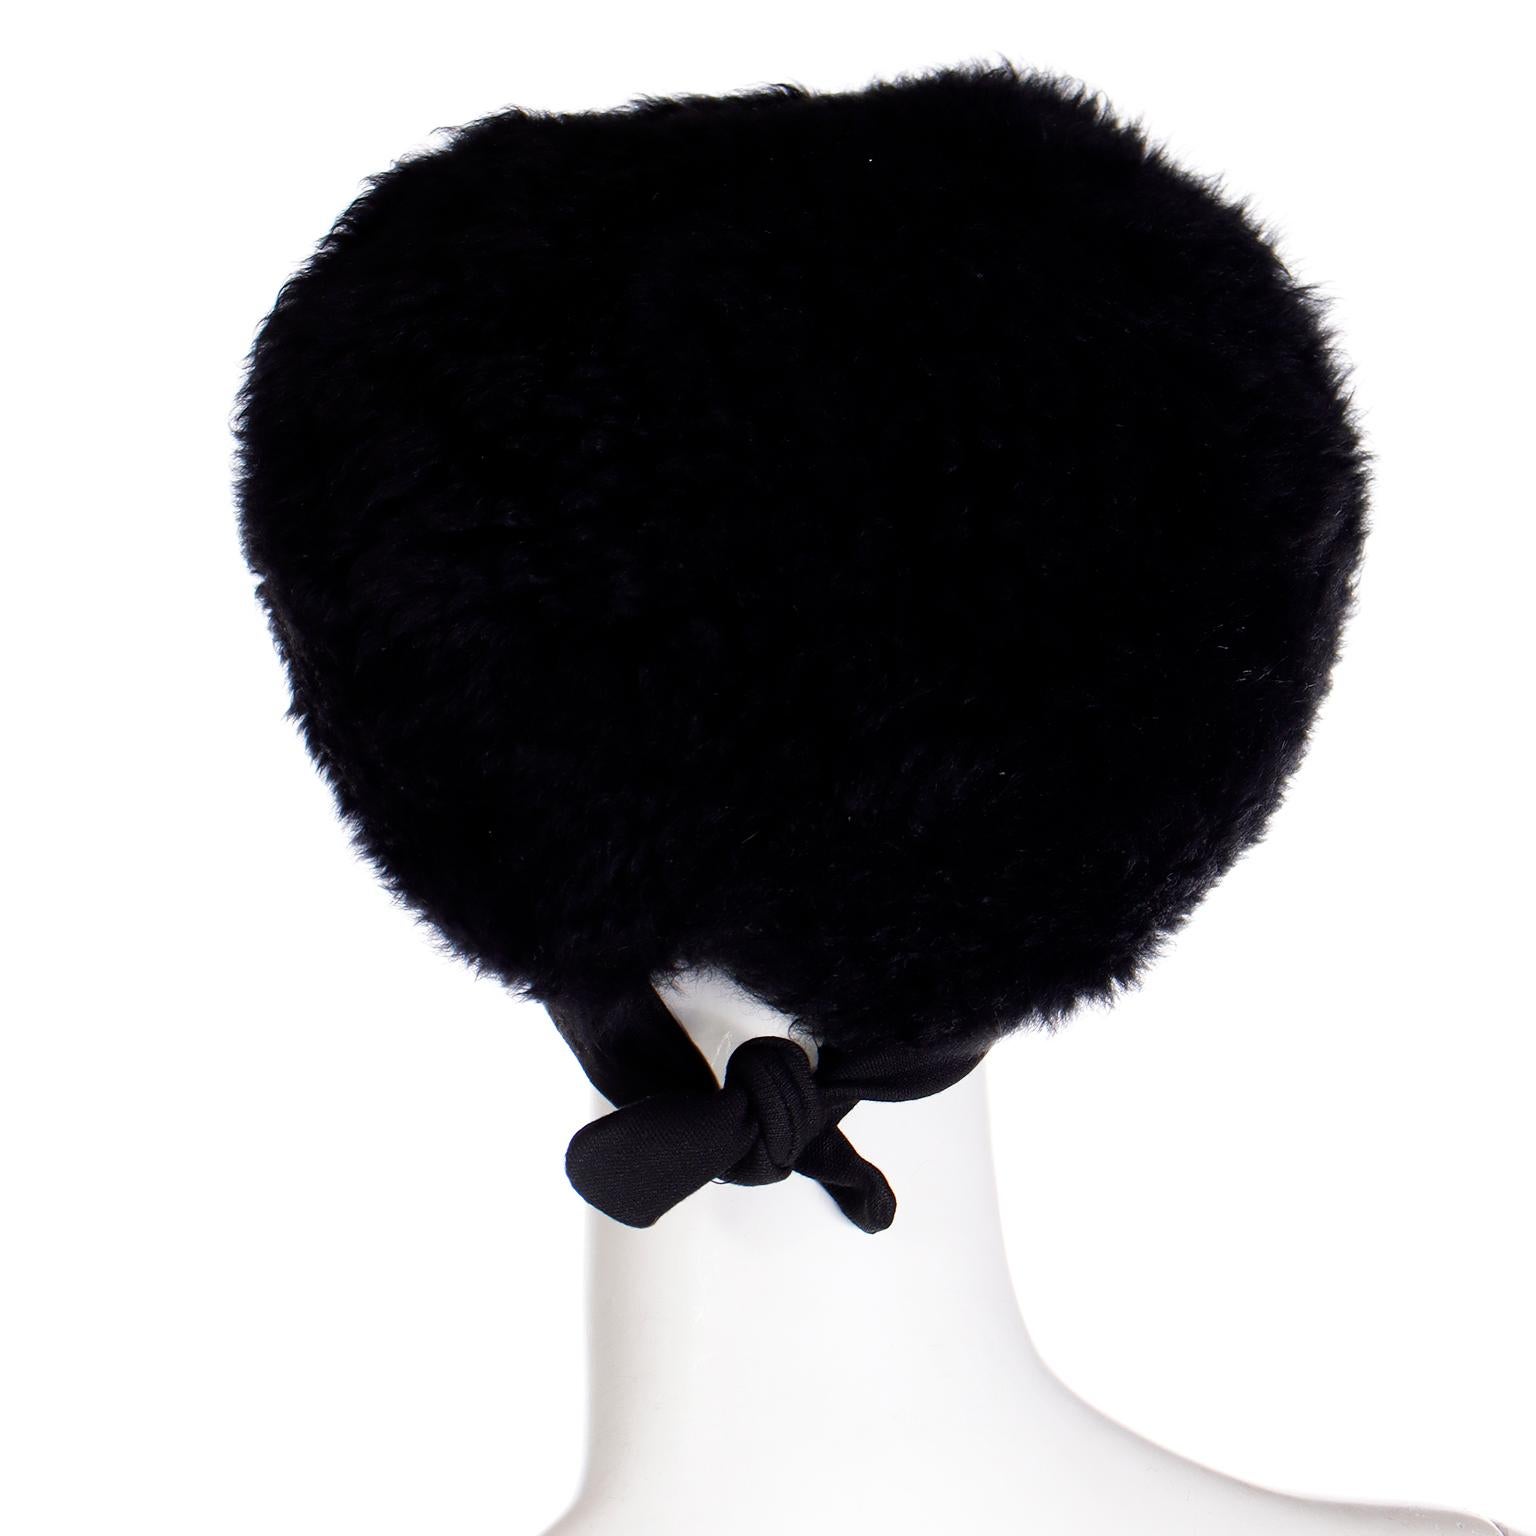 Women's Yves Saint Laurent 1970s Russian inspired Vintage Black Fur Hat